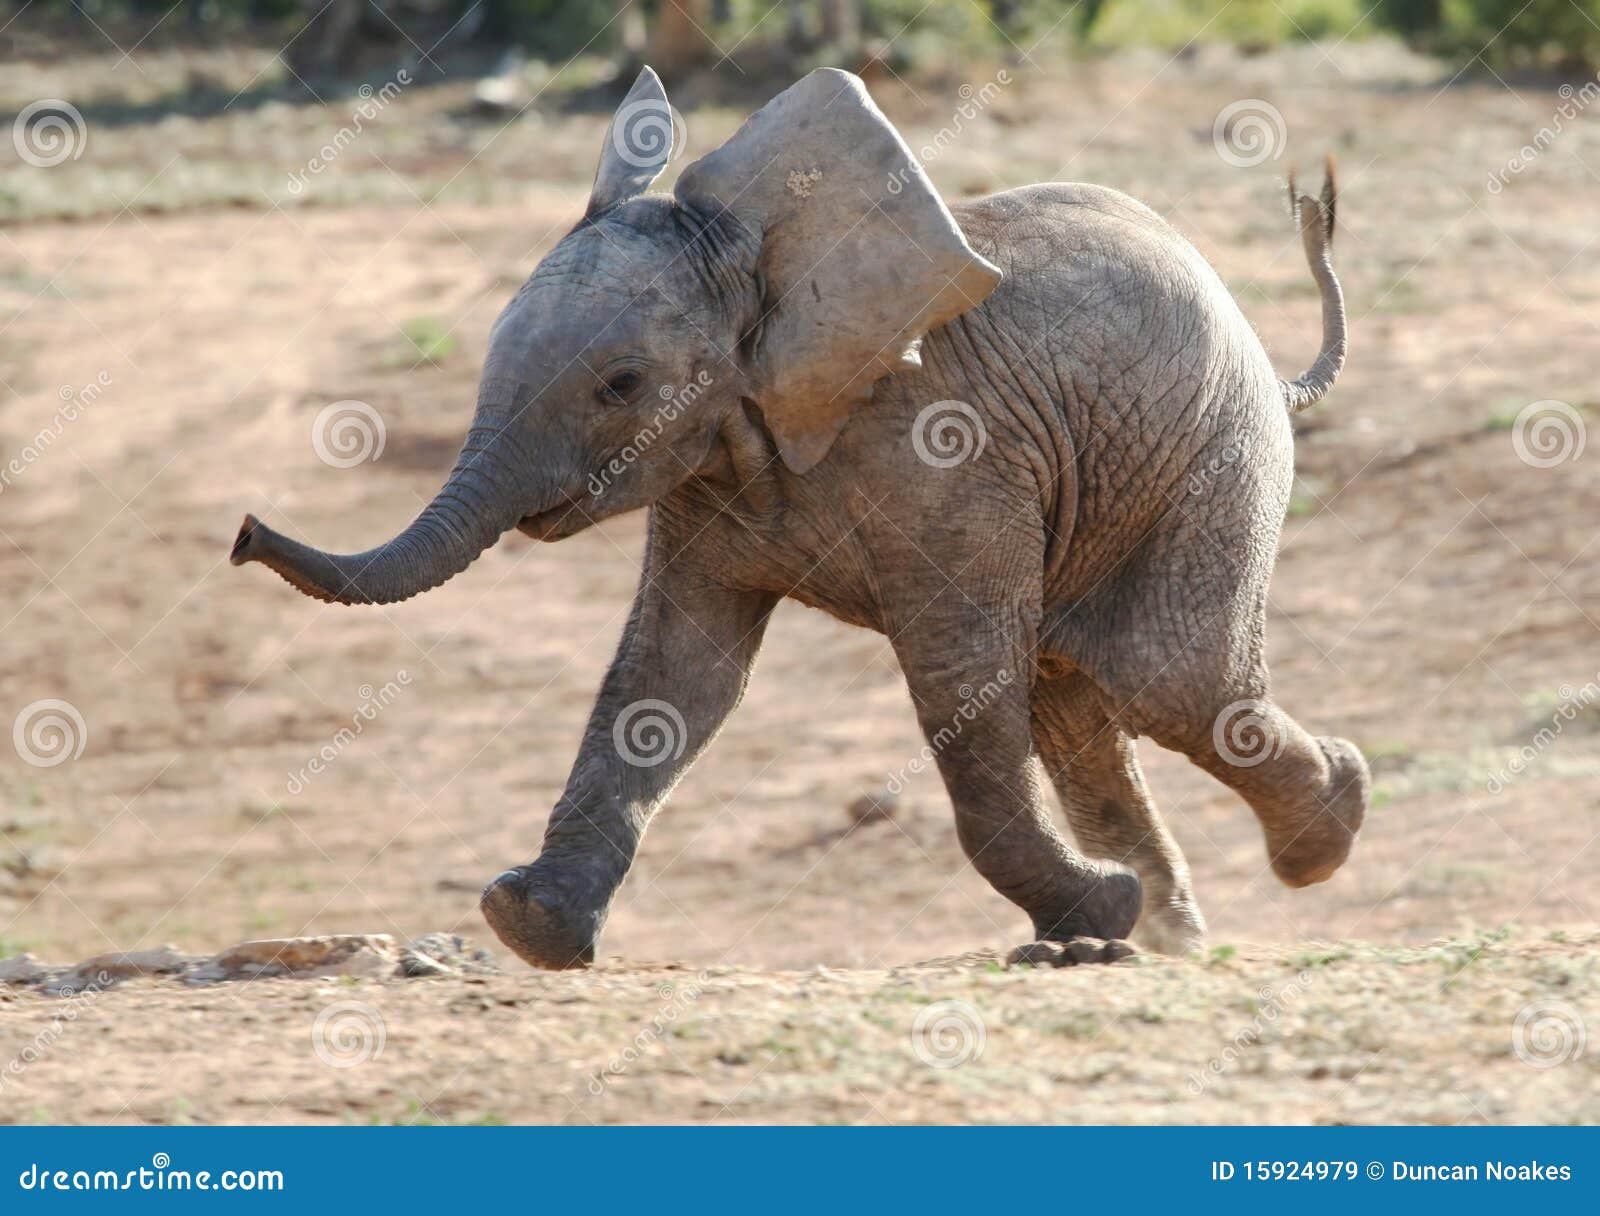 baby elephant running